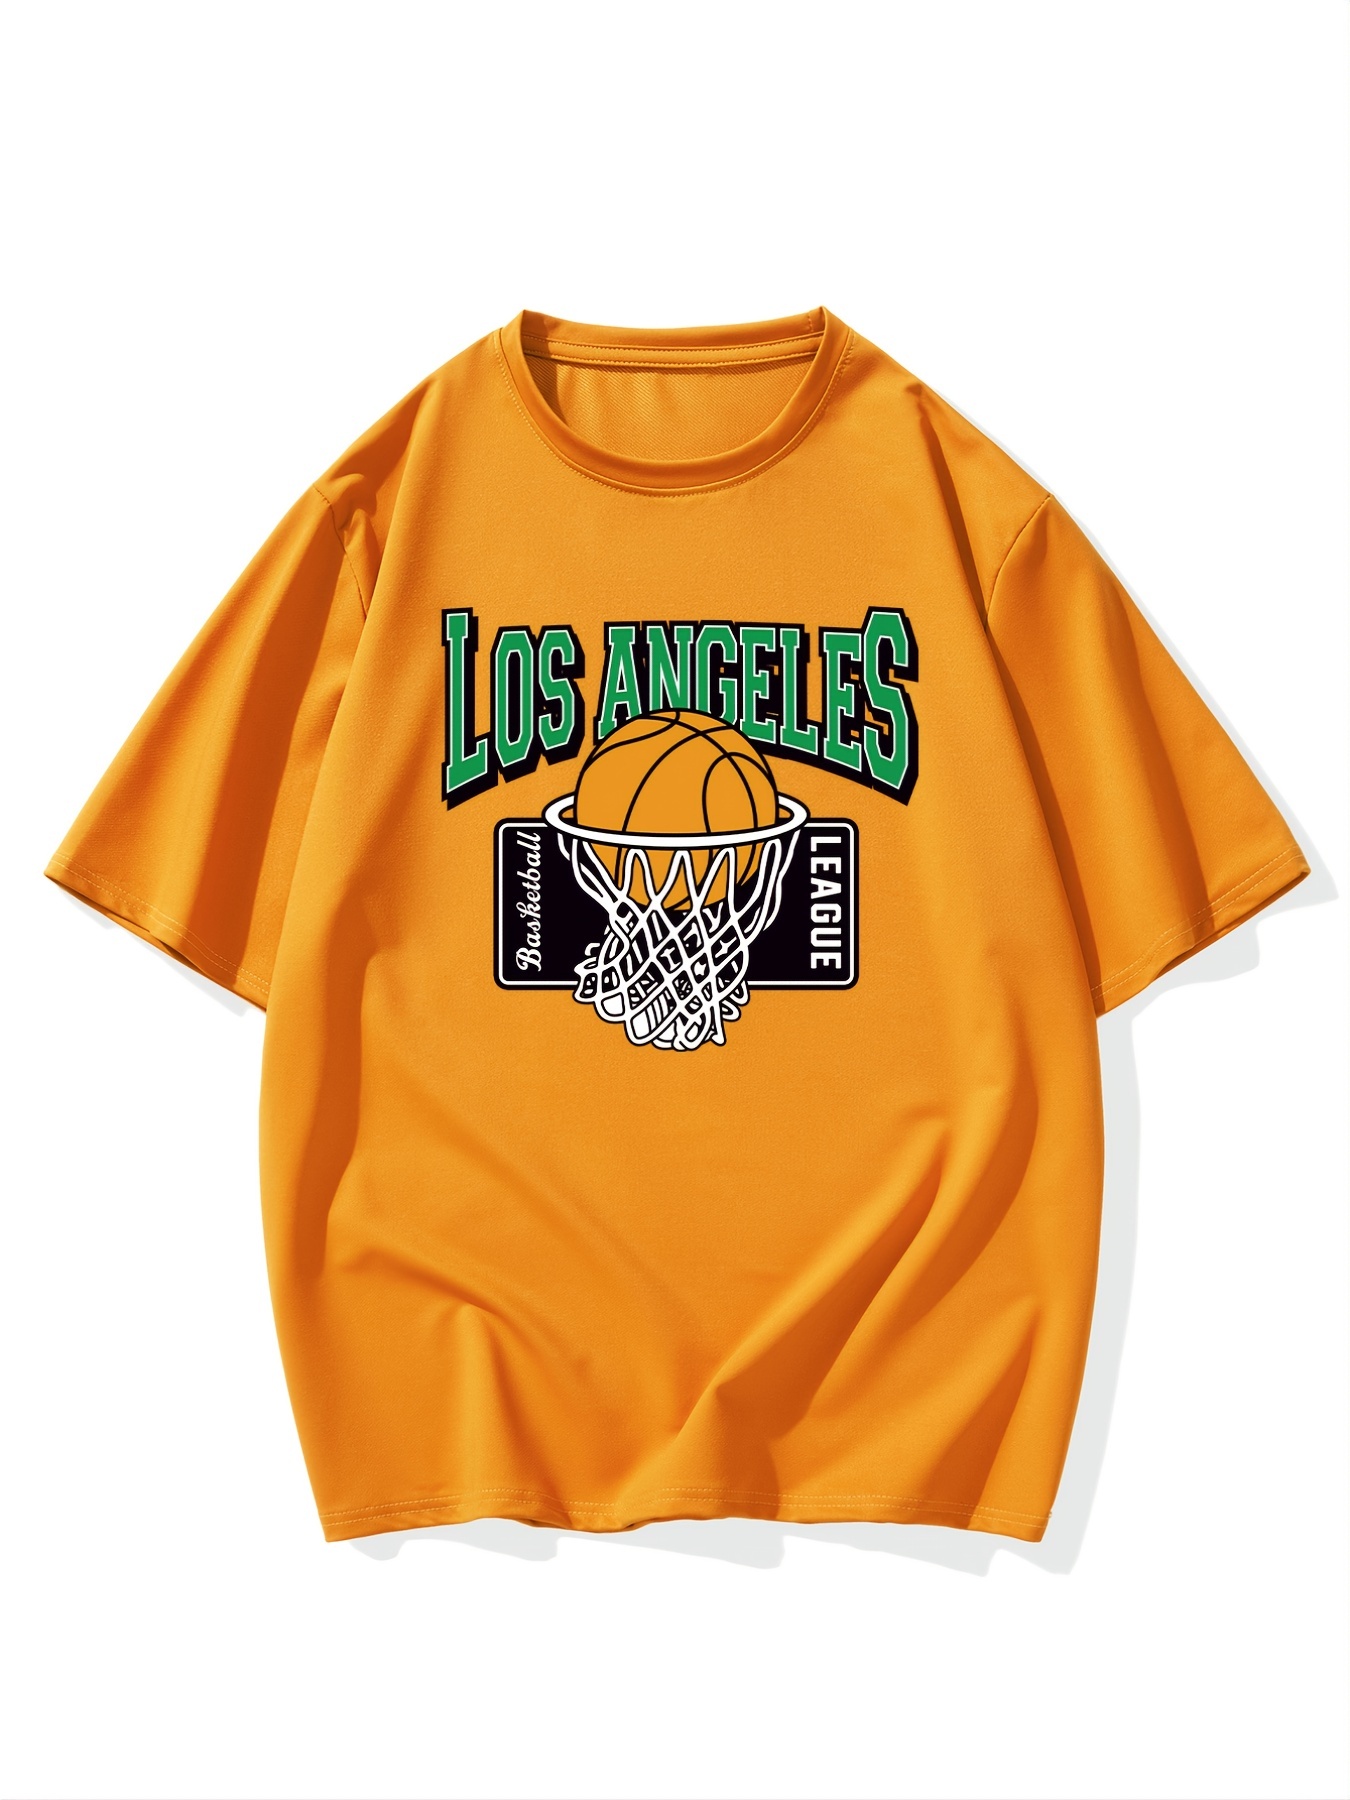 NBA Men's T-Shirt - Yellow - M